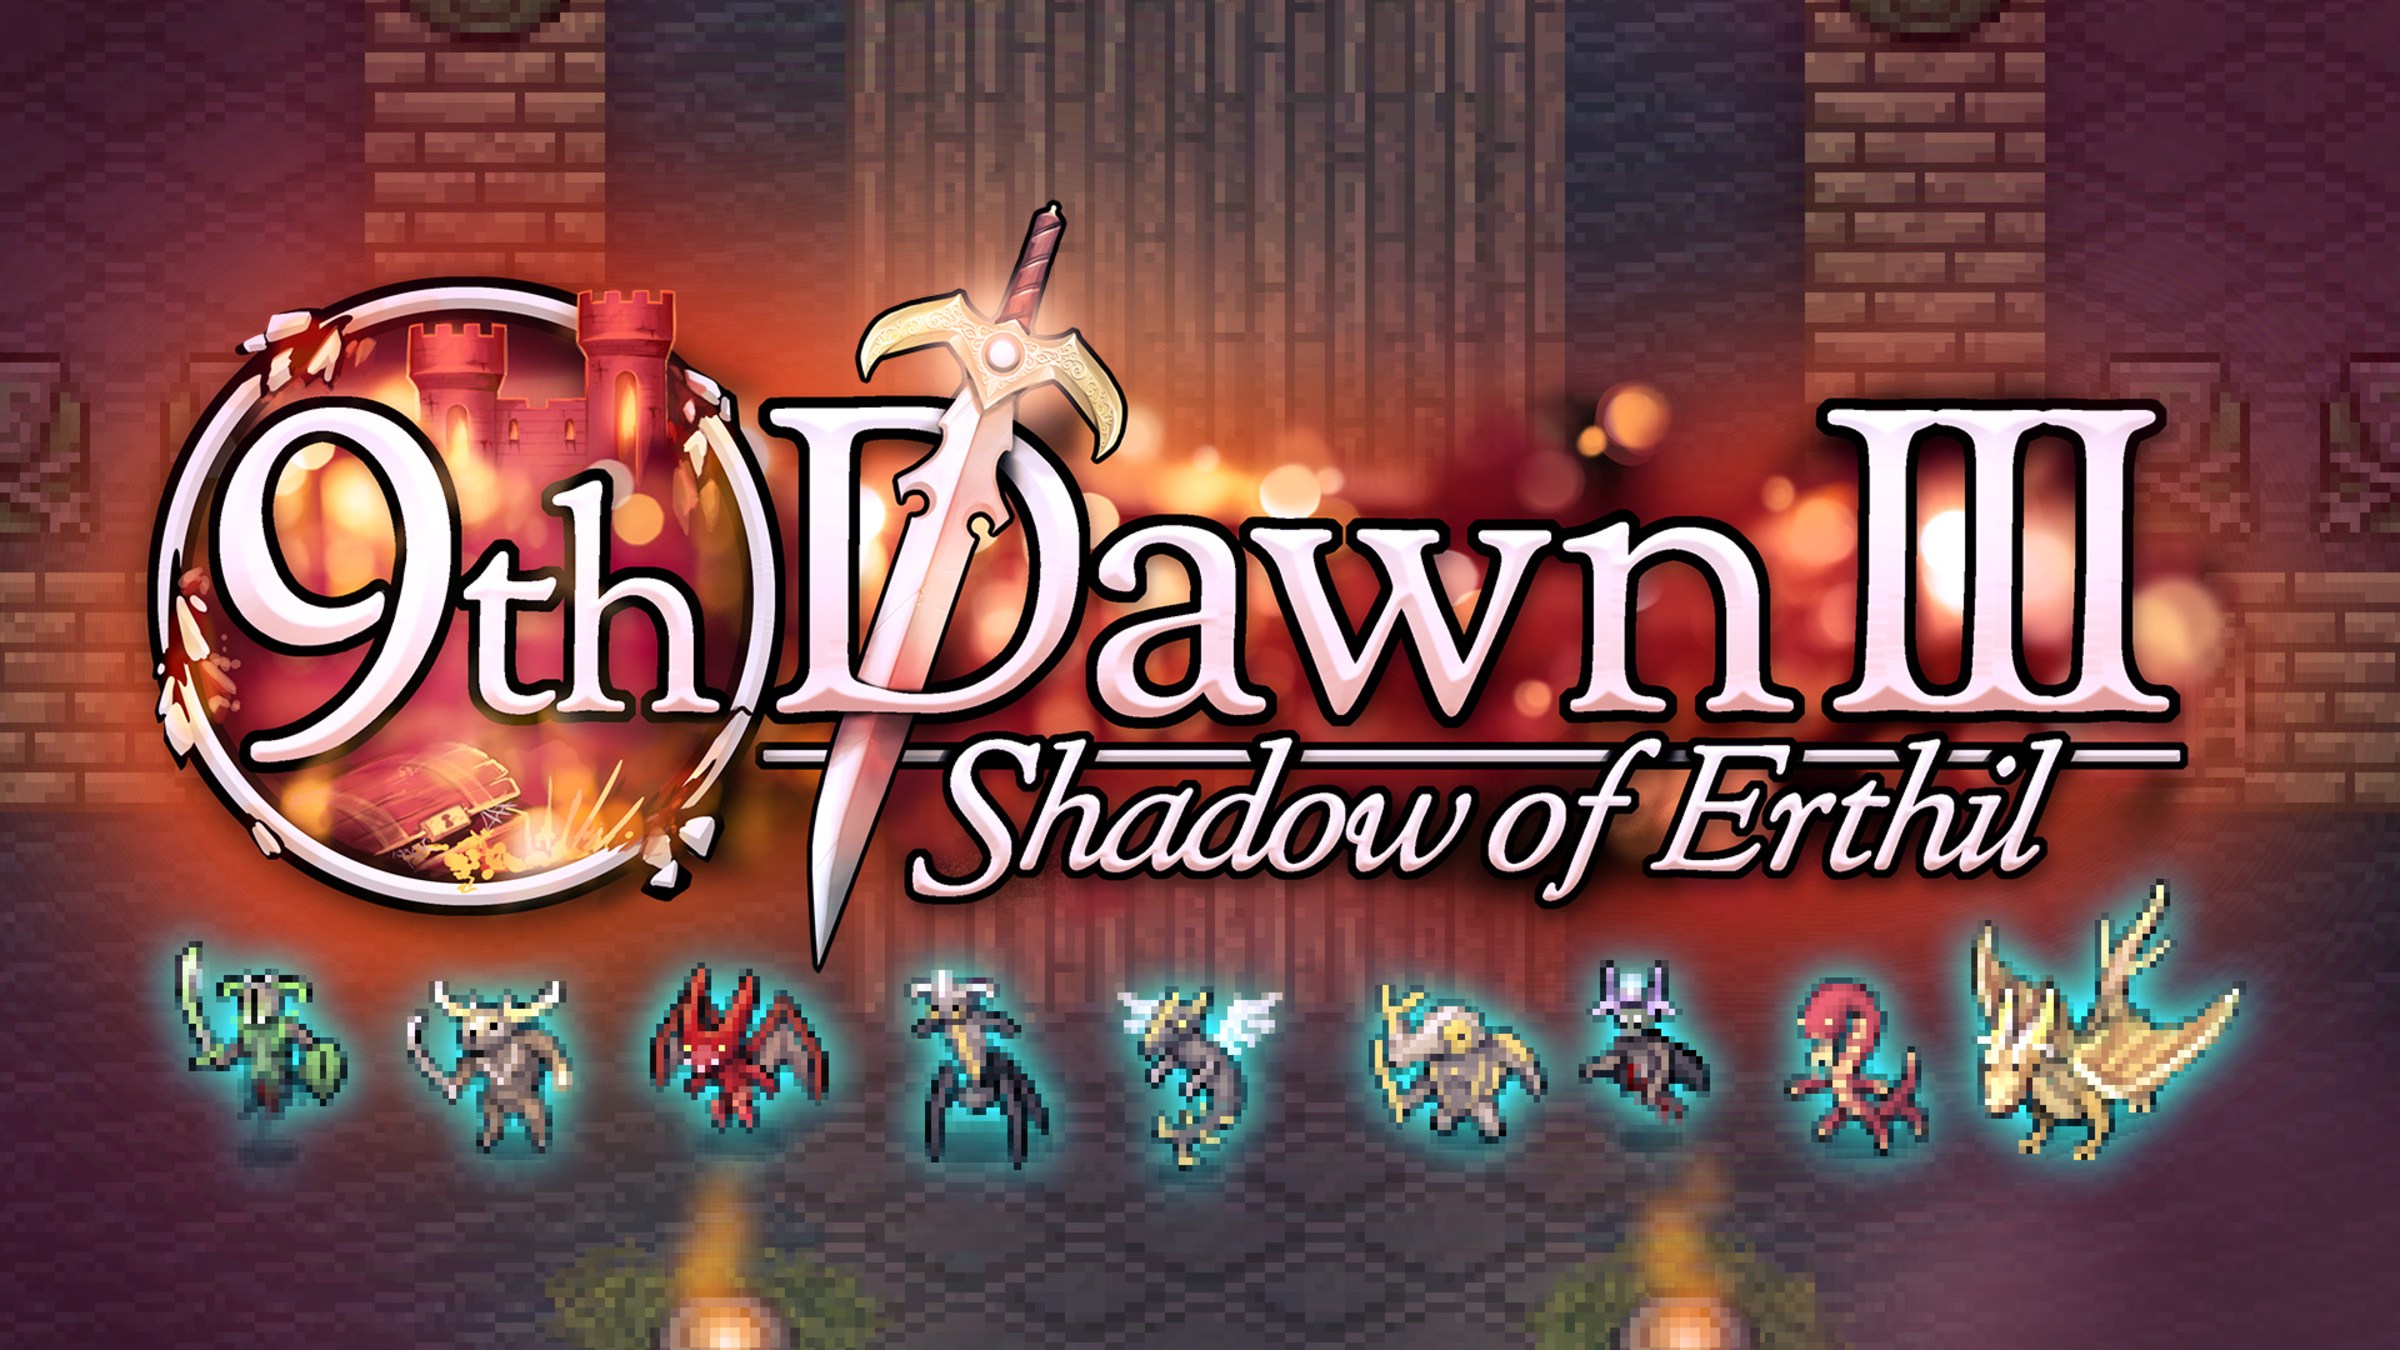 Complete - Shadow Dawn